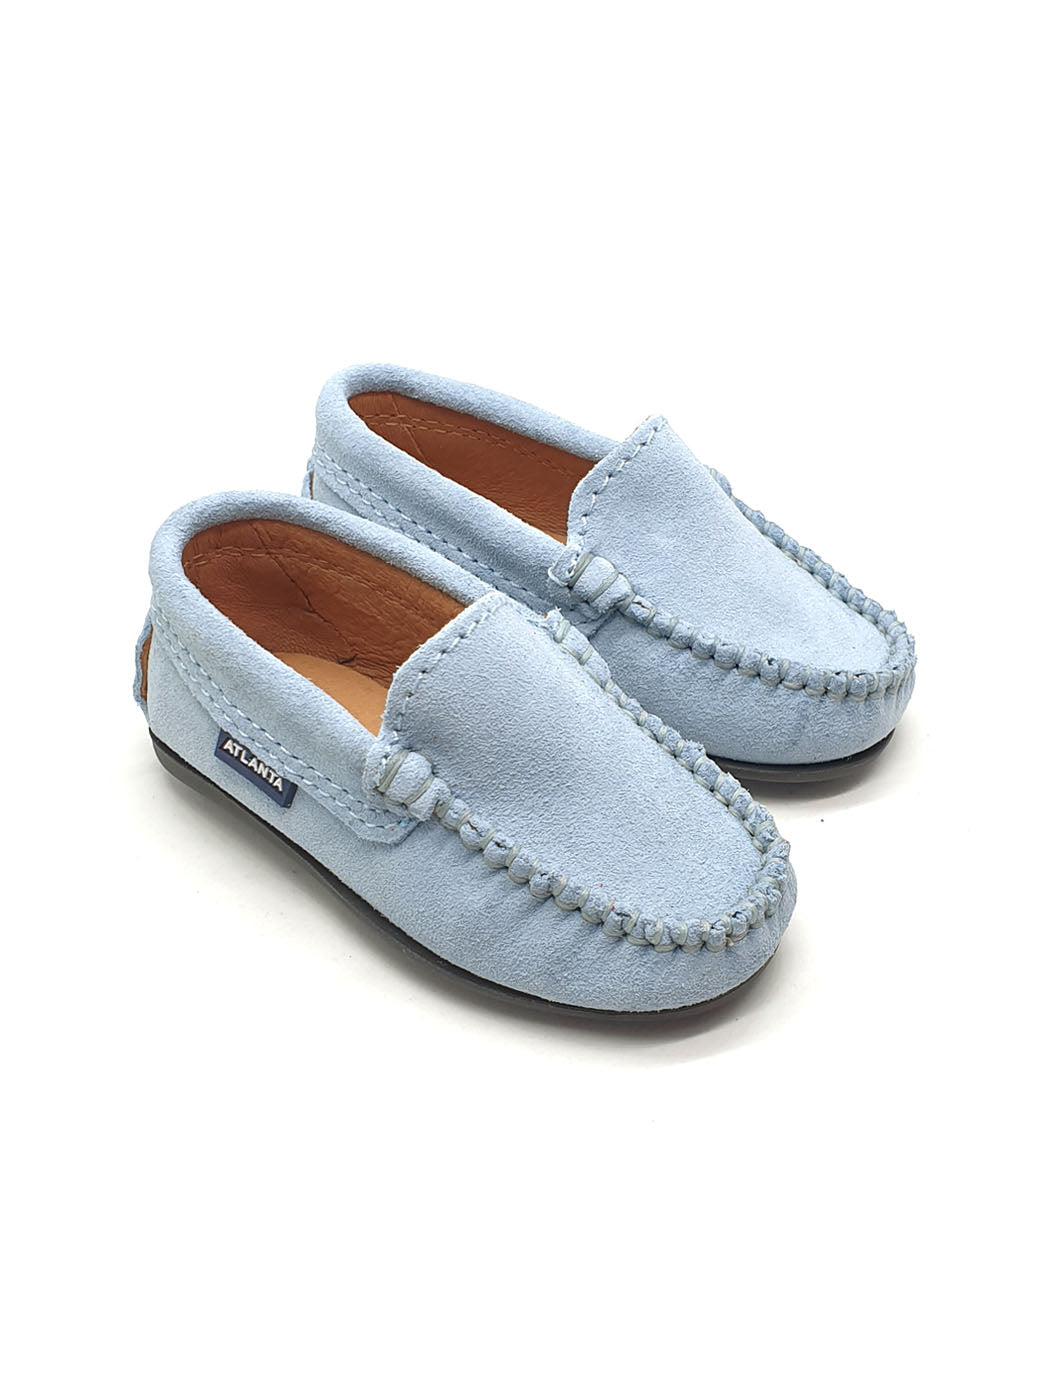 Atlanta Mocassin- Baby Shoes Moccasins light blue-15G154